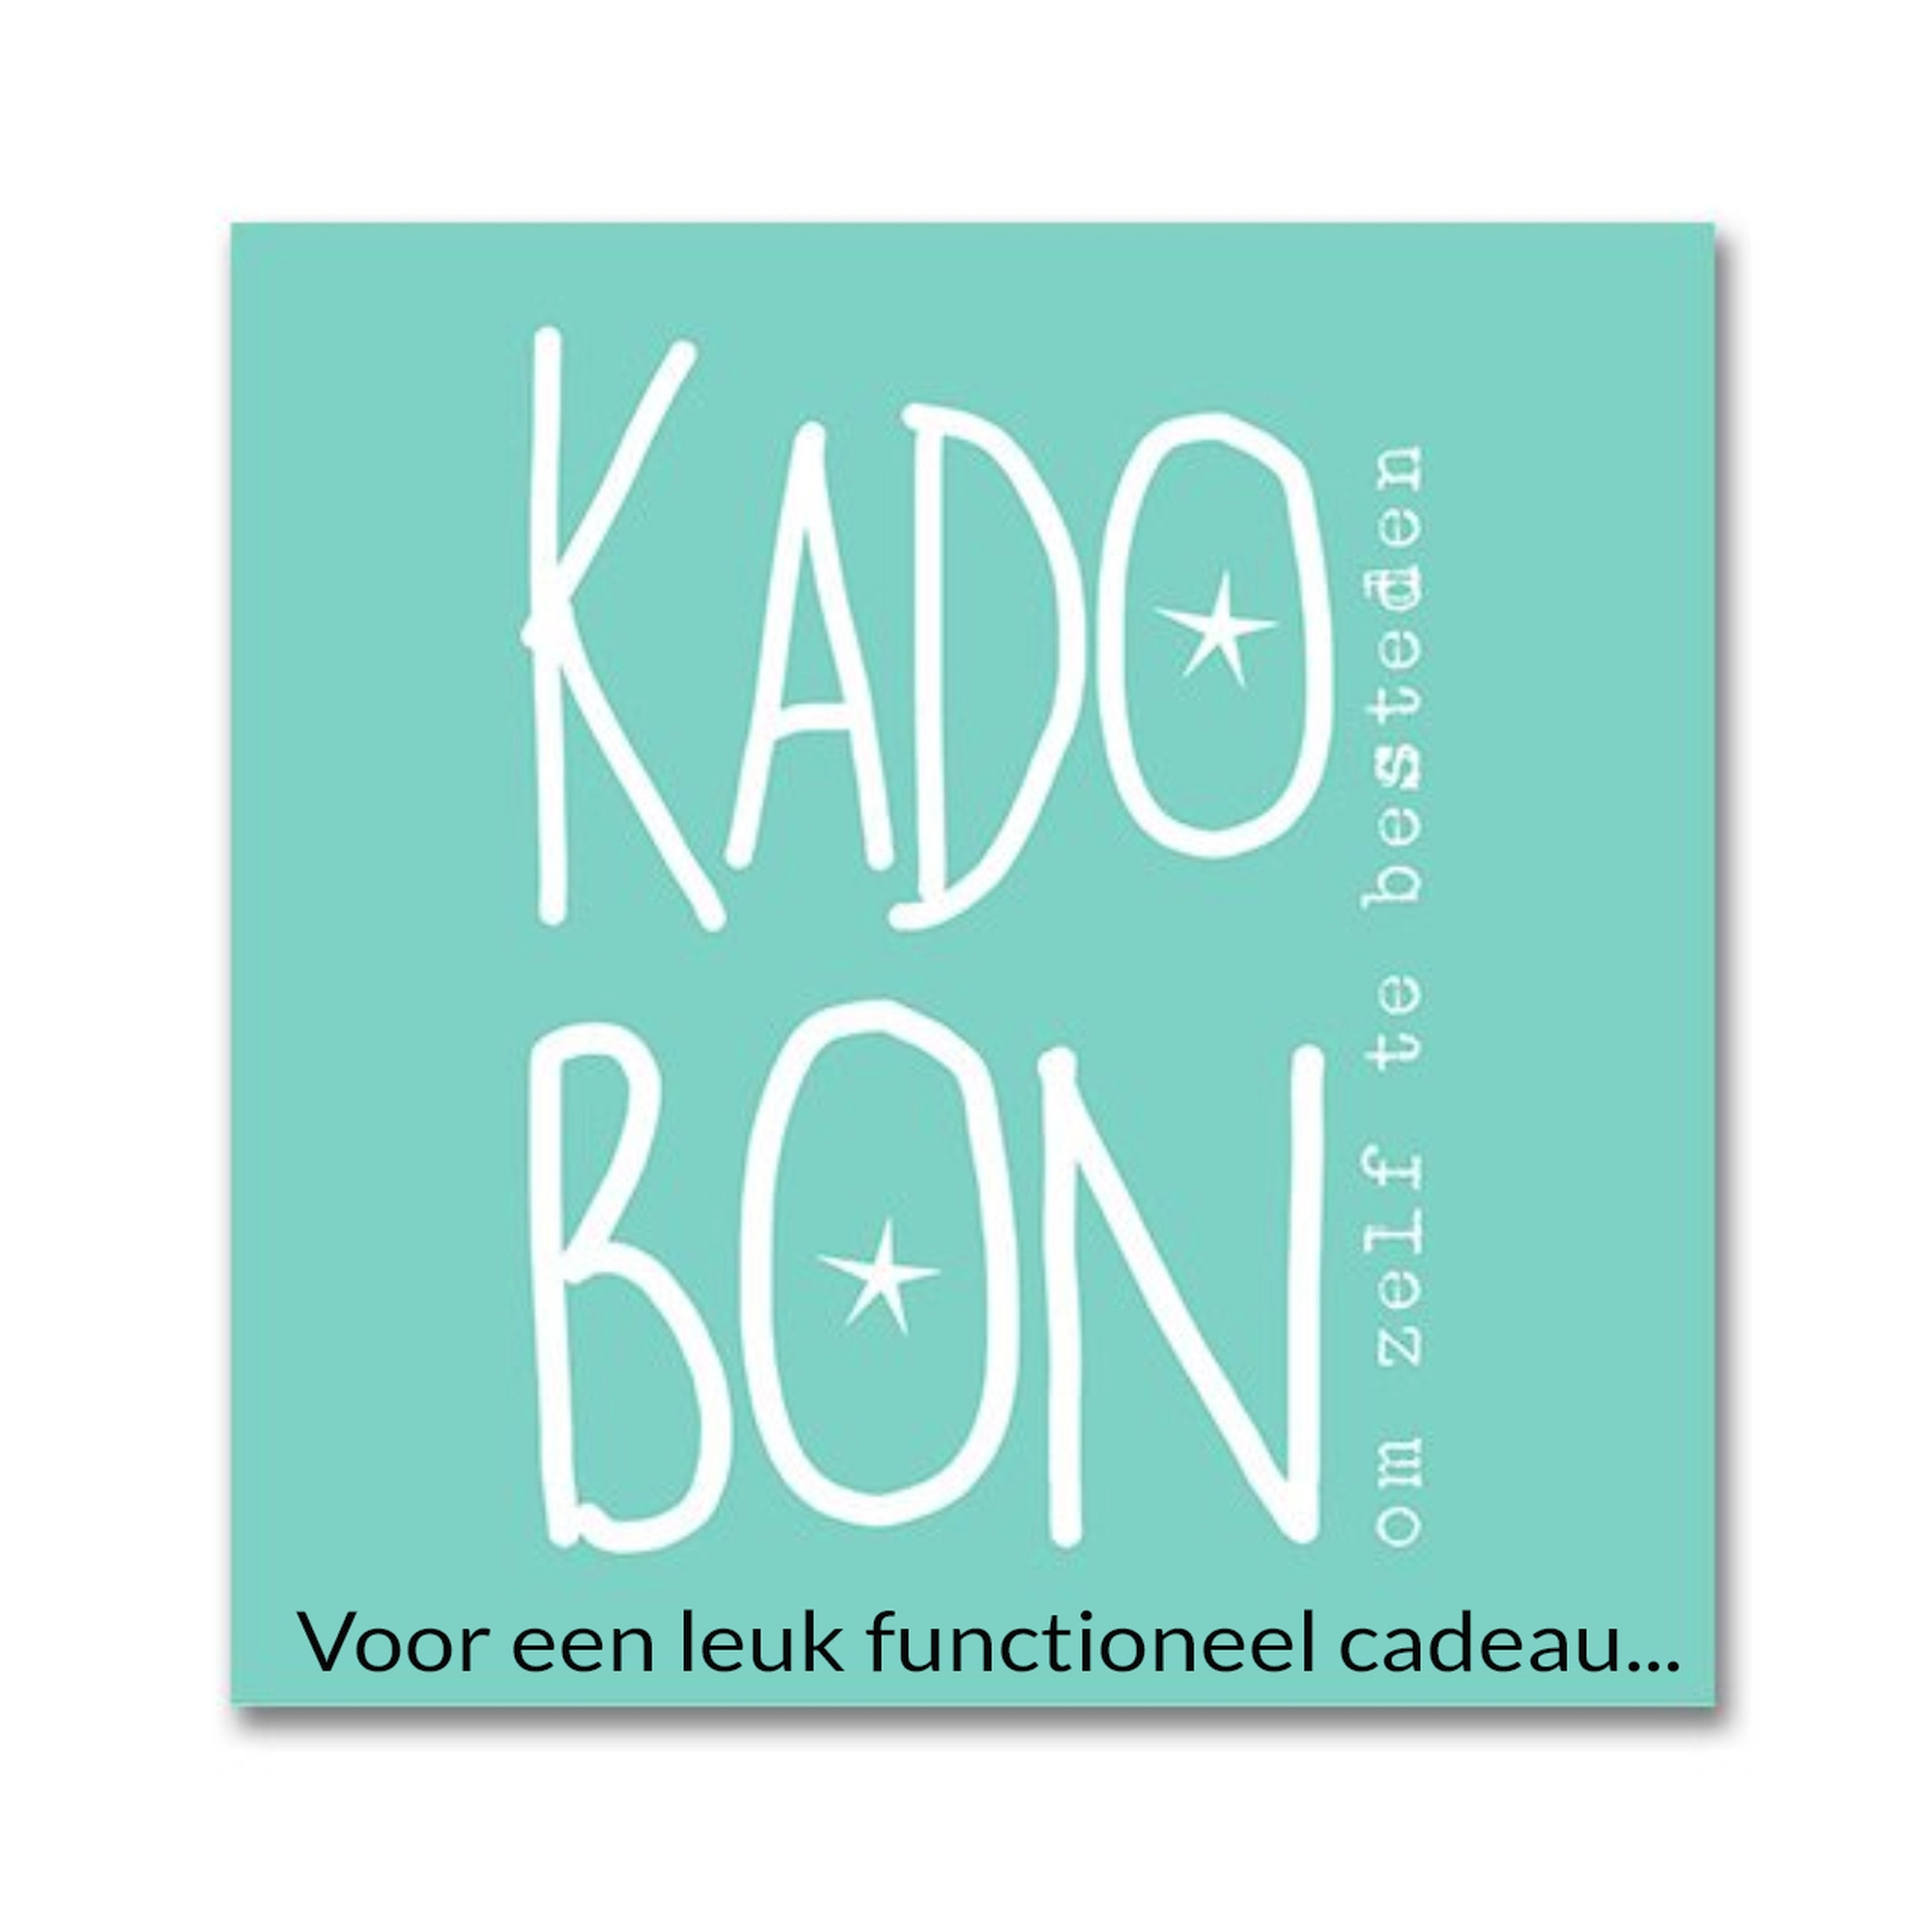 Steenwijk Schoenmode Kadobon Eur 75,00